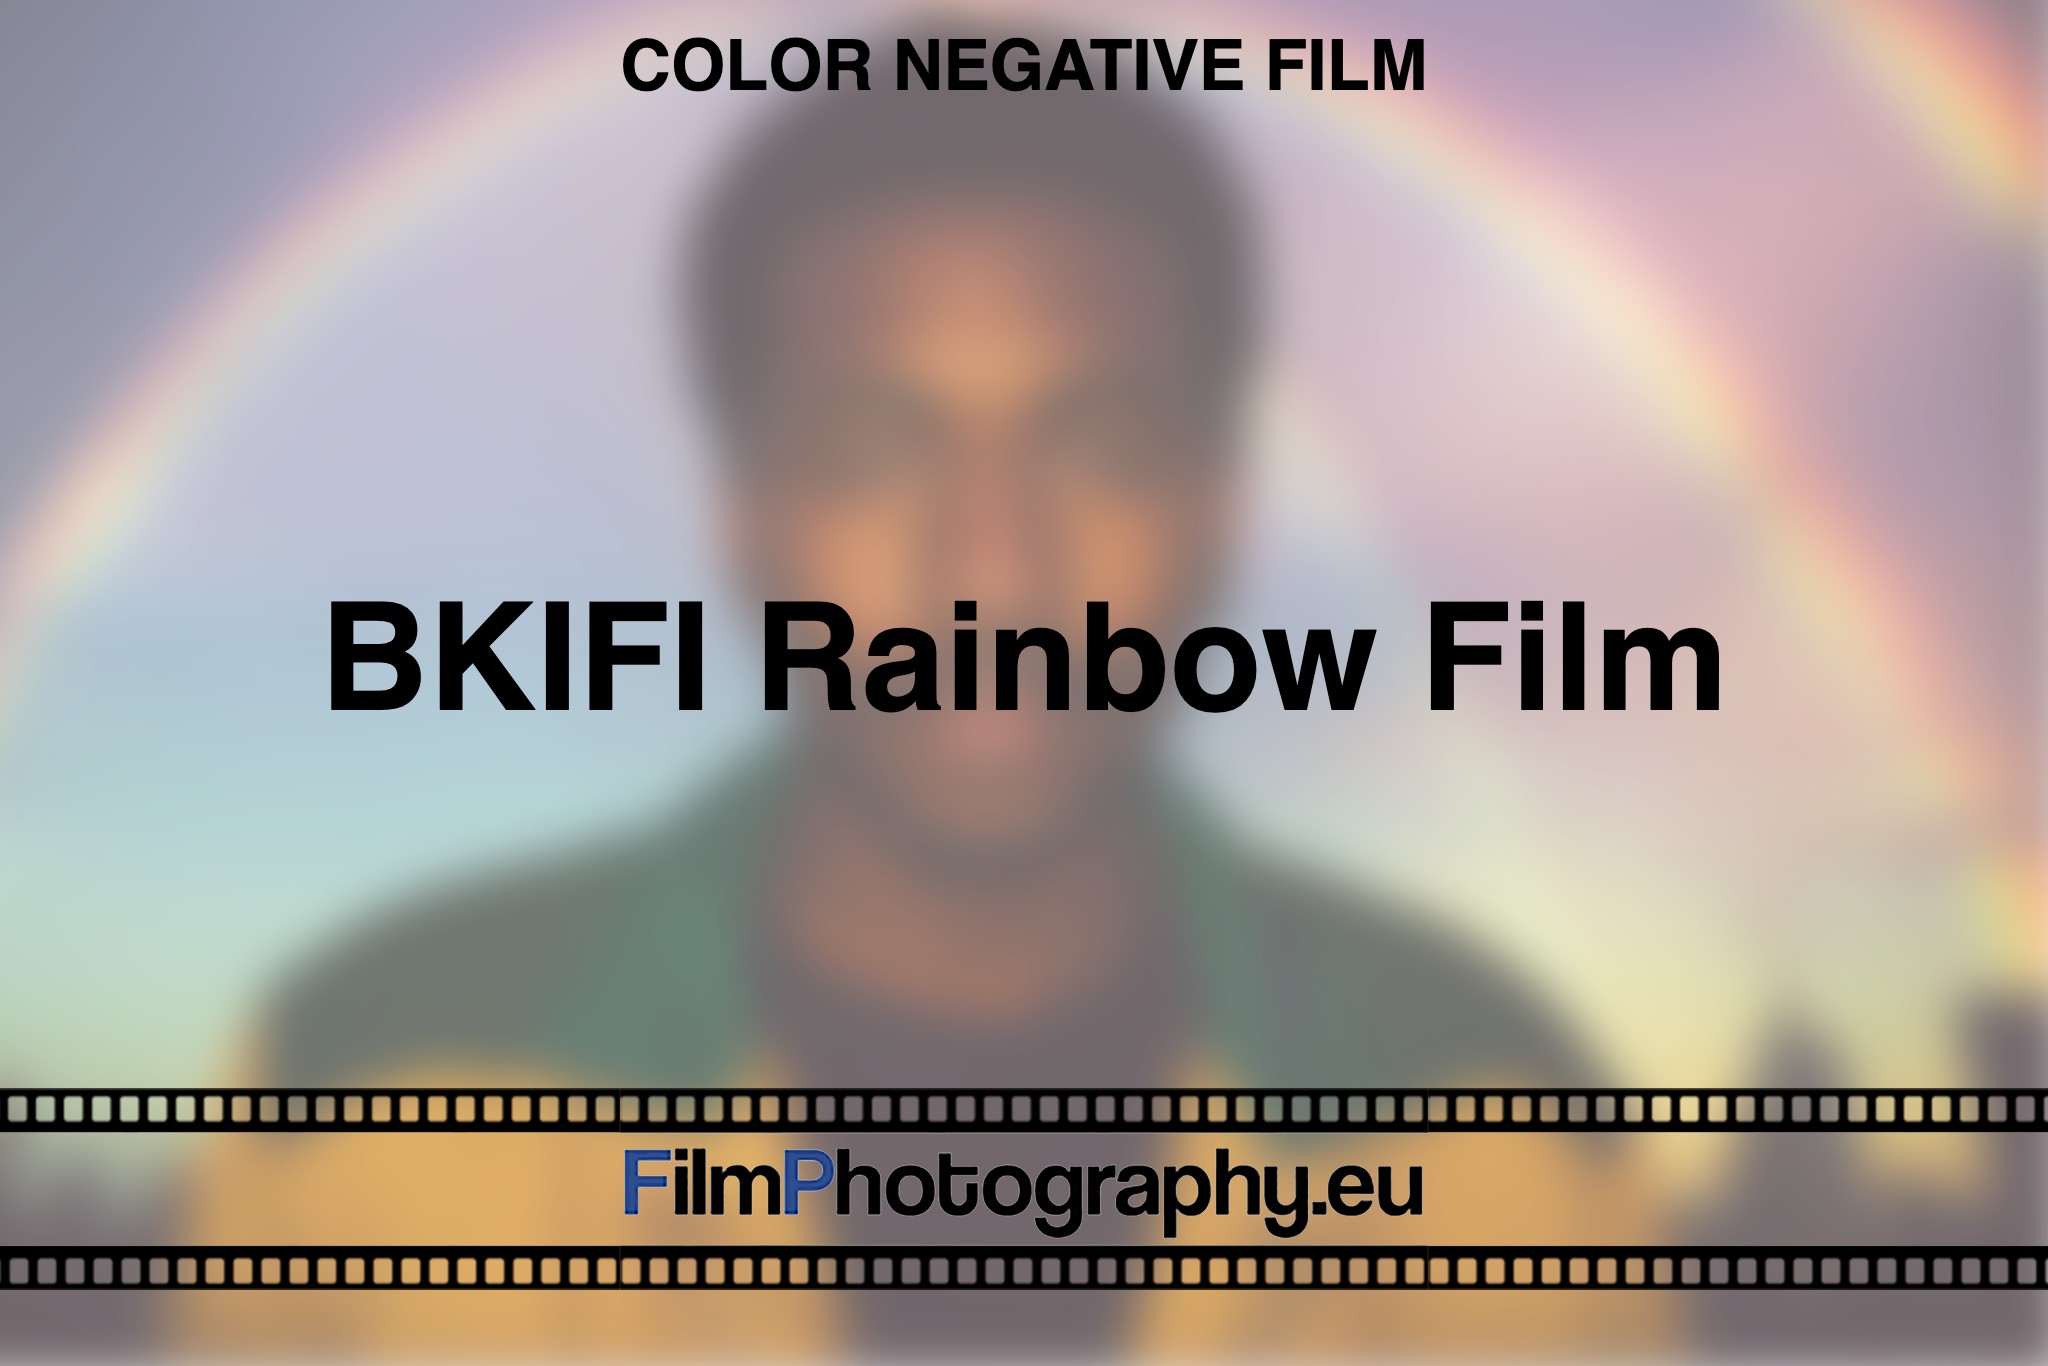 BKIFI-Rainbow-Film-Color-negative-film-bnv